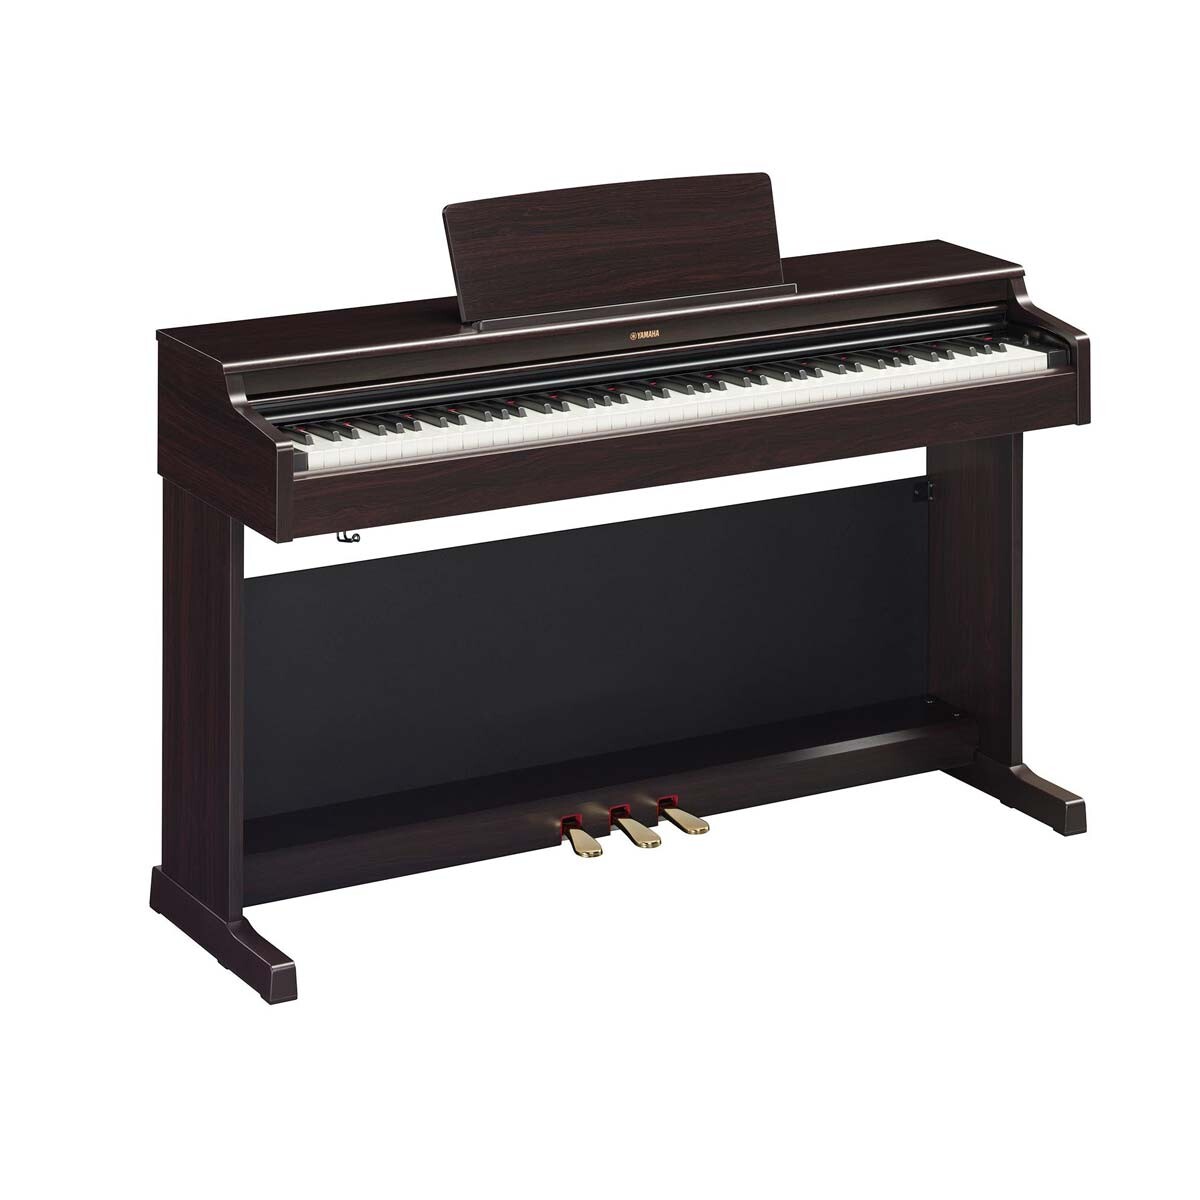 Piano Digital Yamaha Ydp165r 